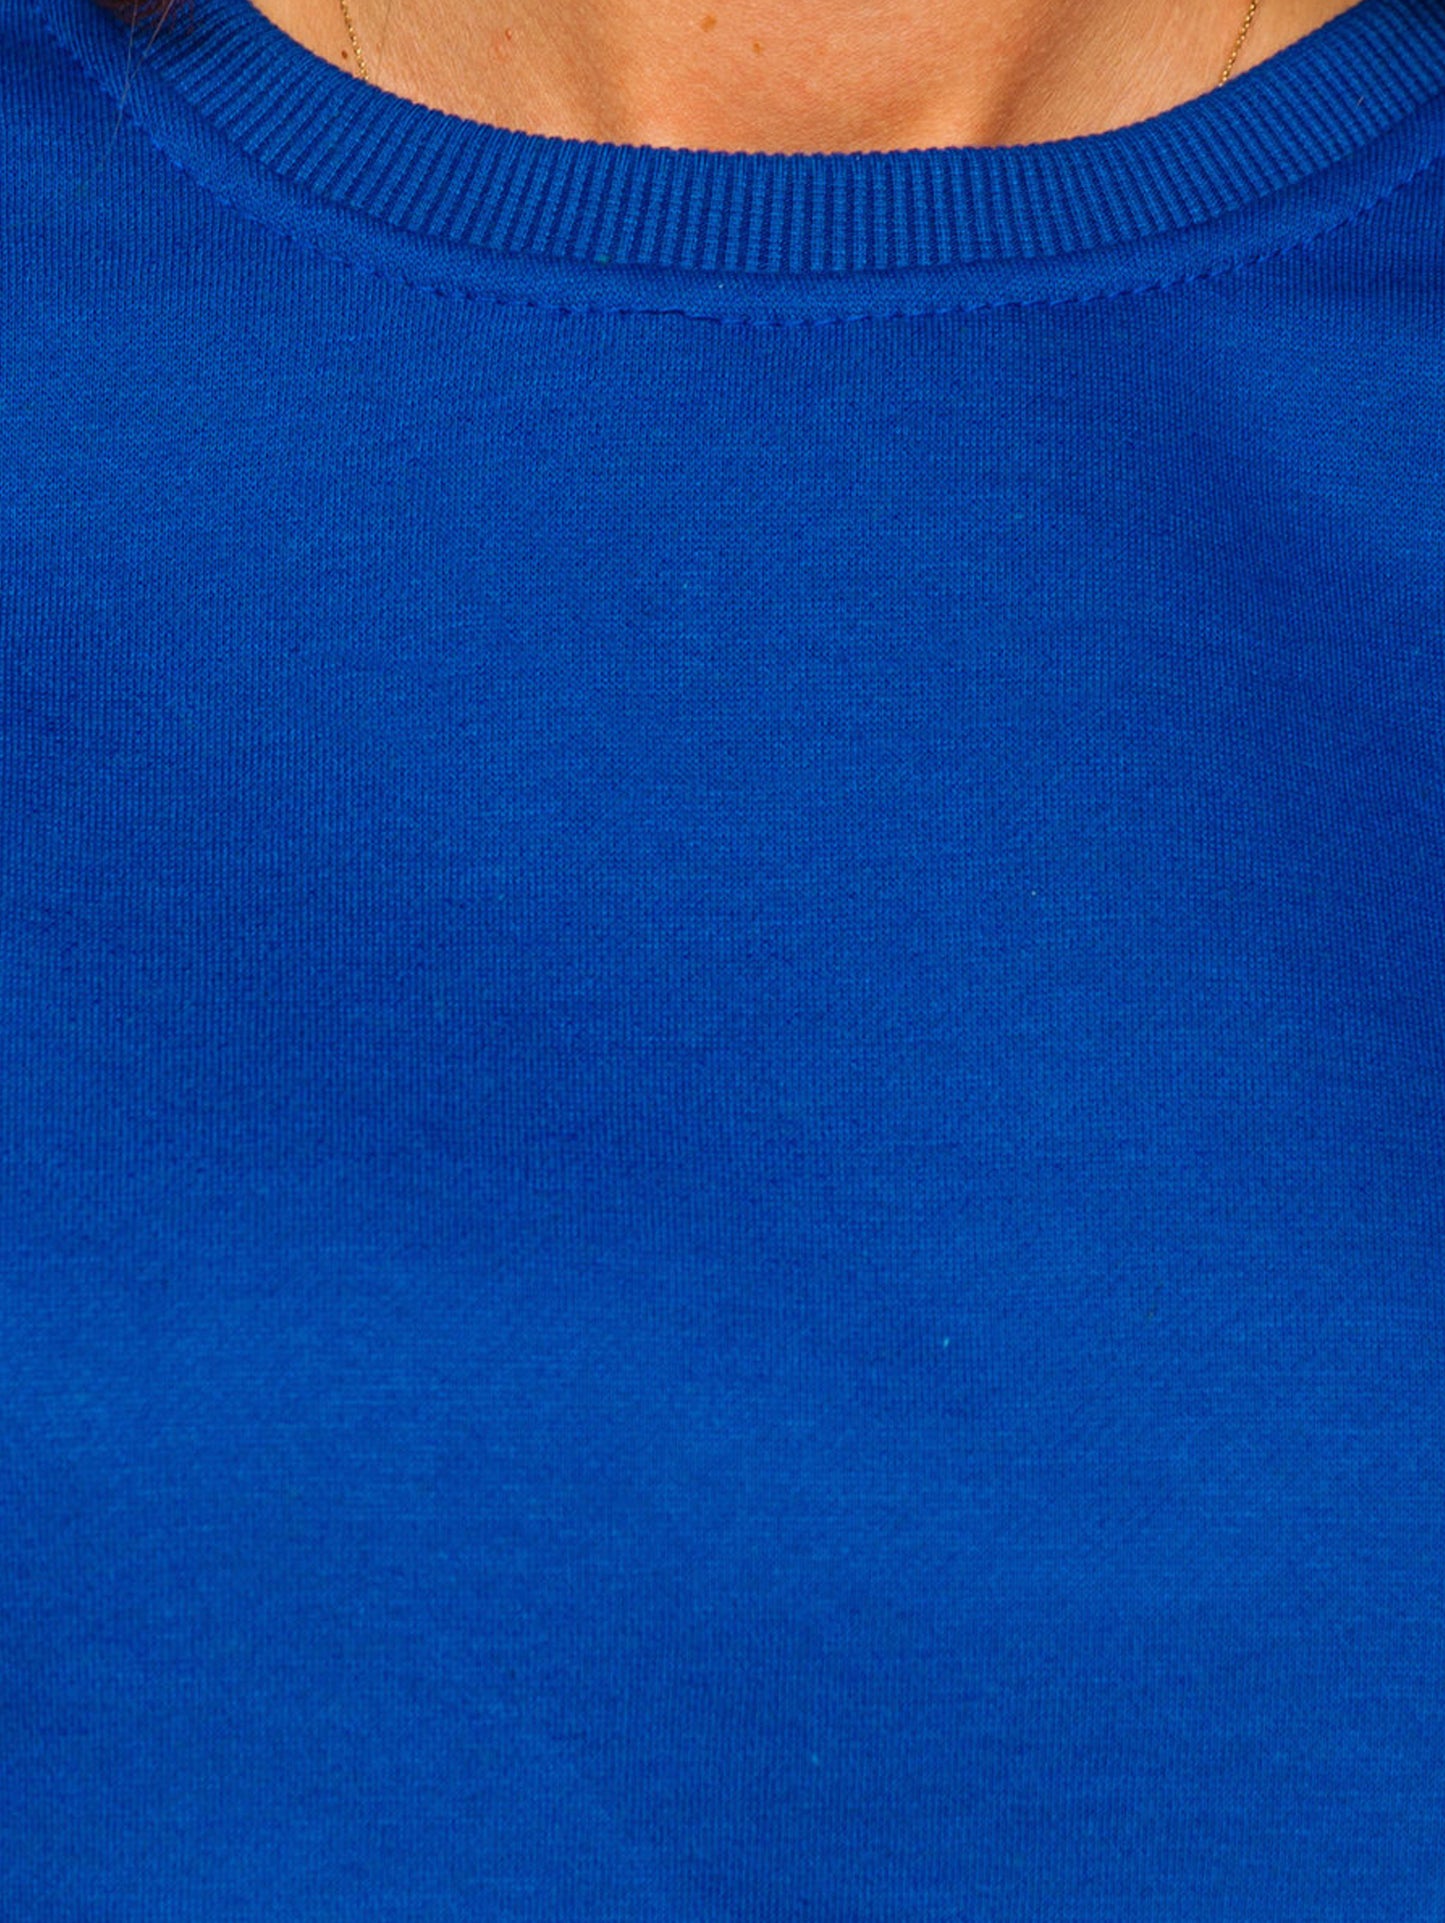 Women's Basic Royal Blue Sweatshirt